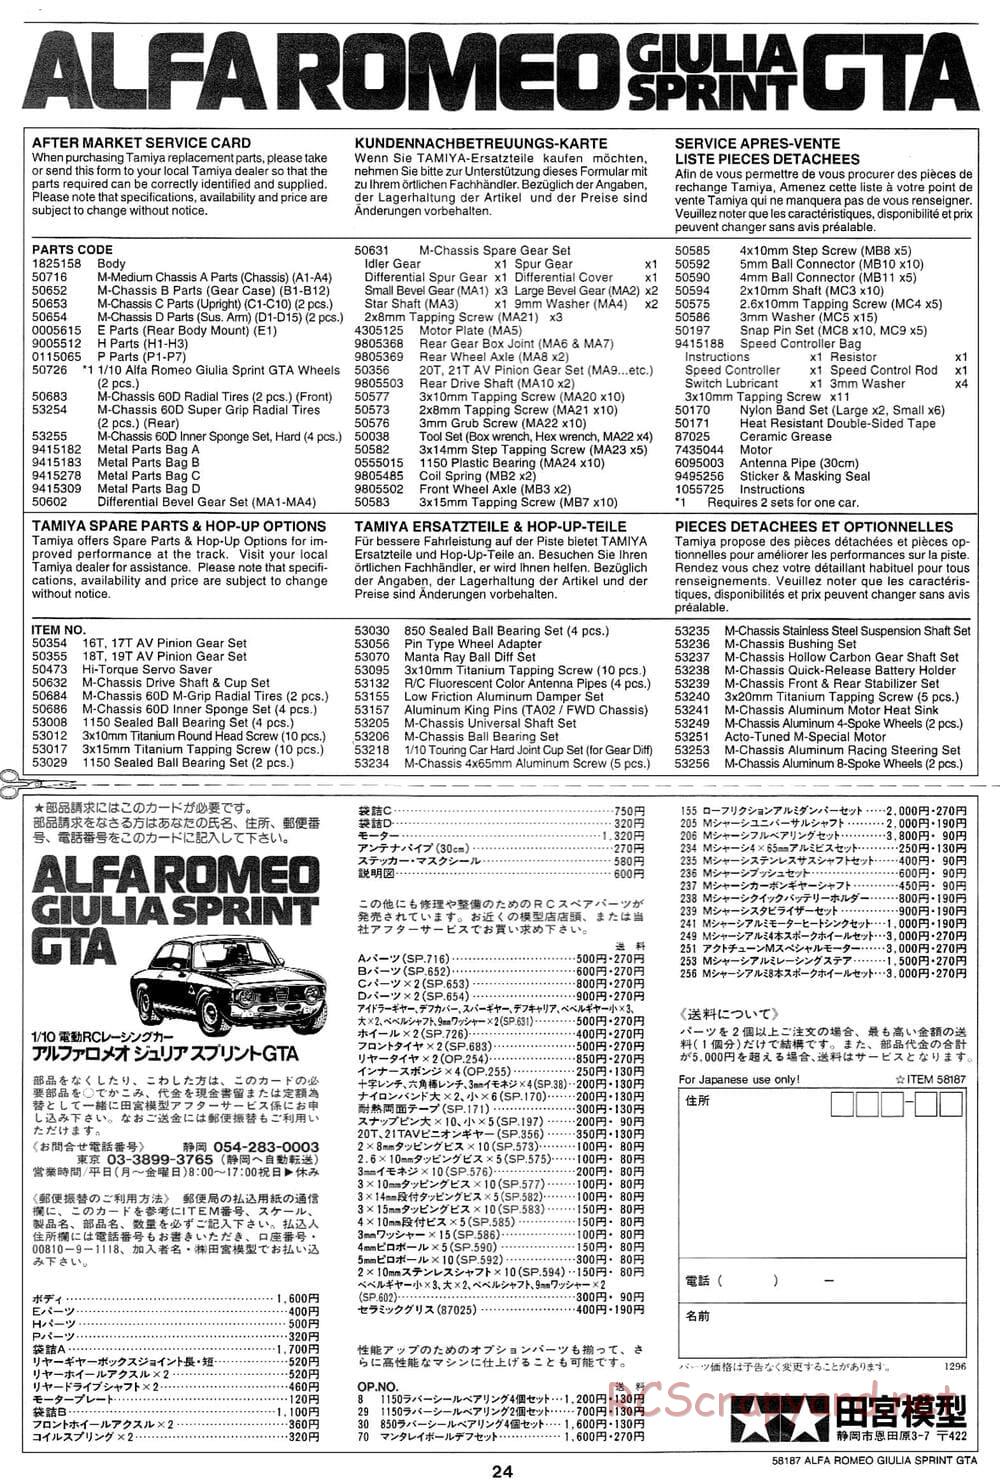 Tamiya - Alfa Romeo Giulia Sprint GTA - M02M Chassis - Manual - Page 24